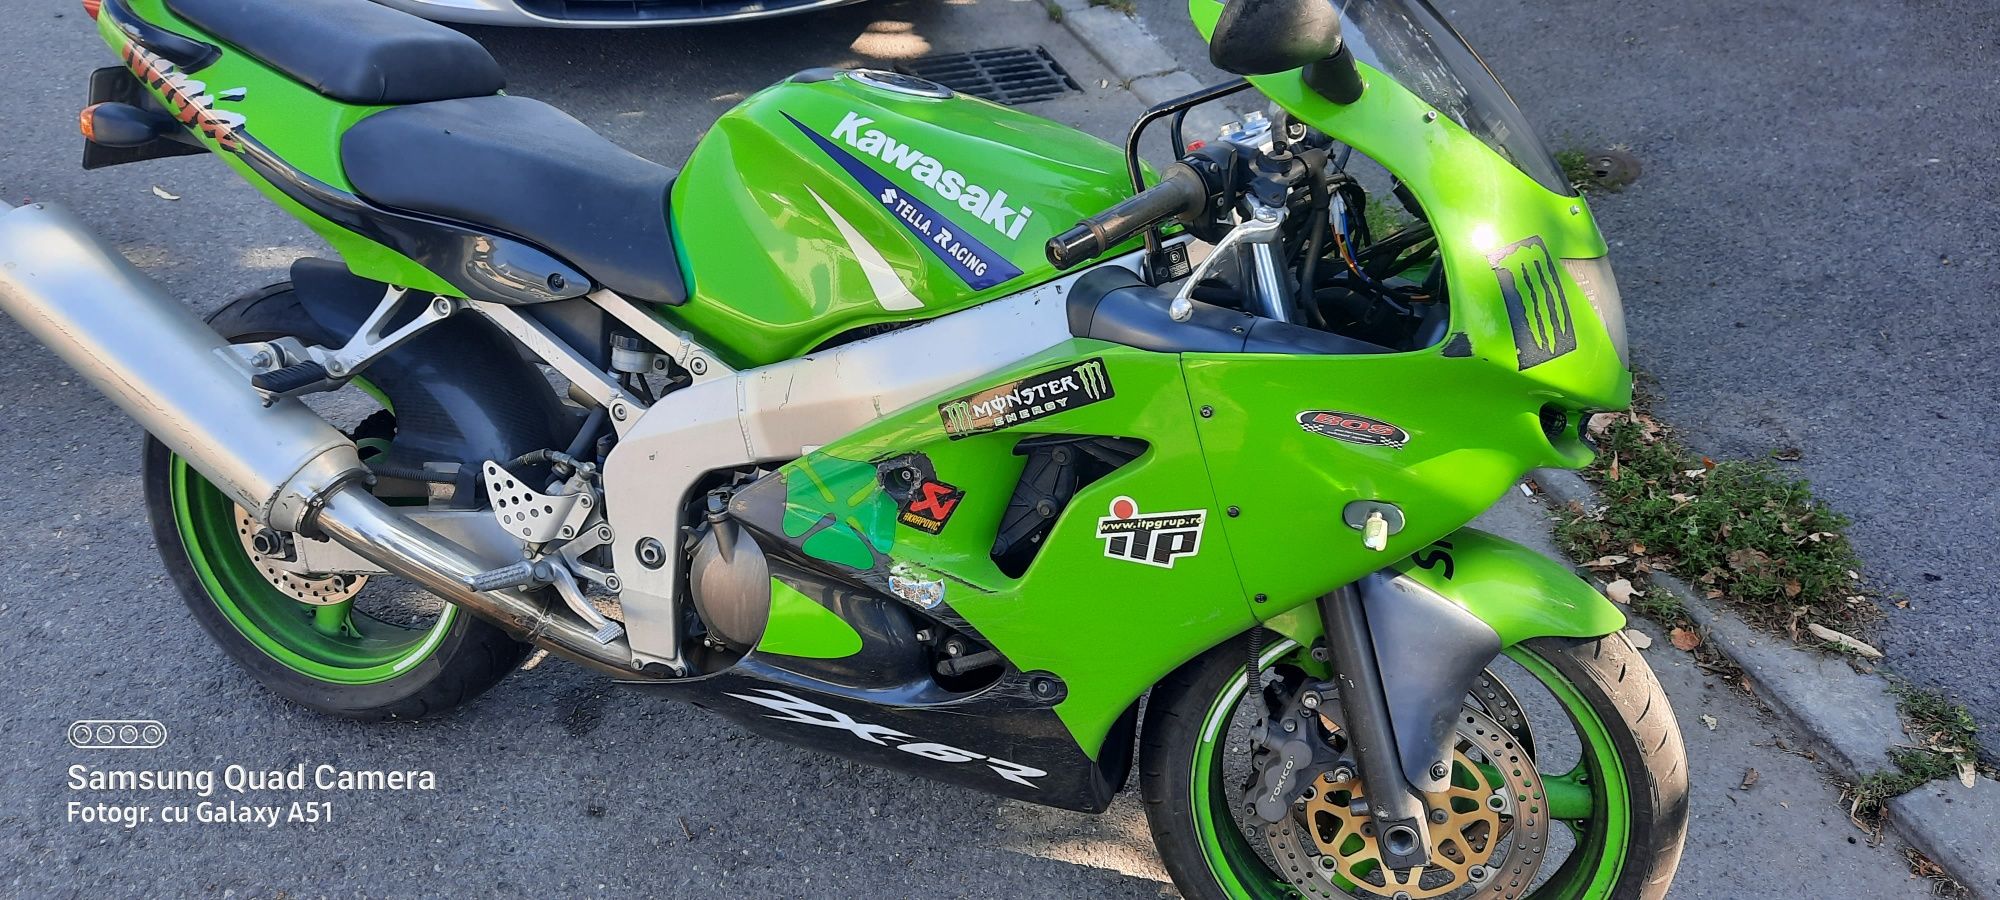 Kawasaki ninja 600